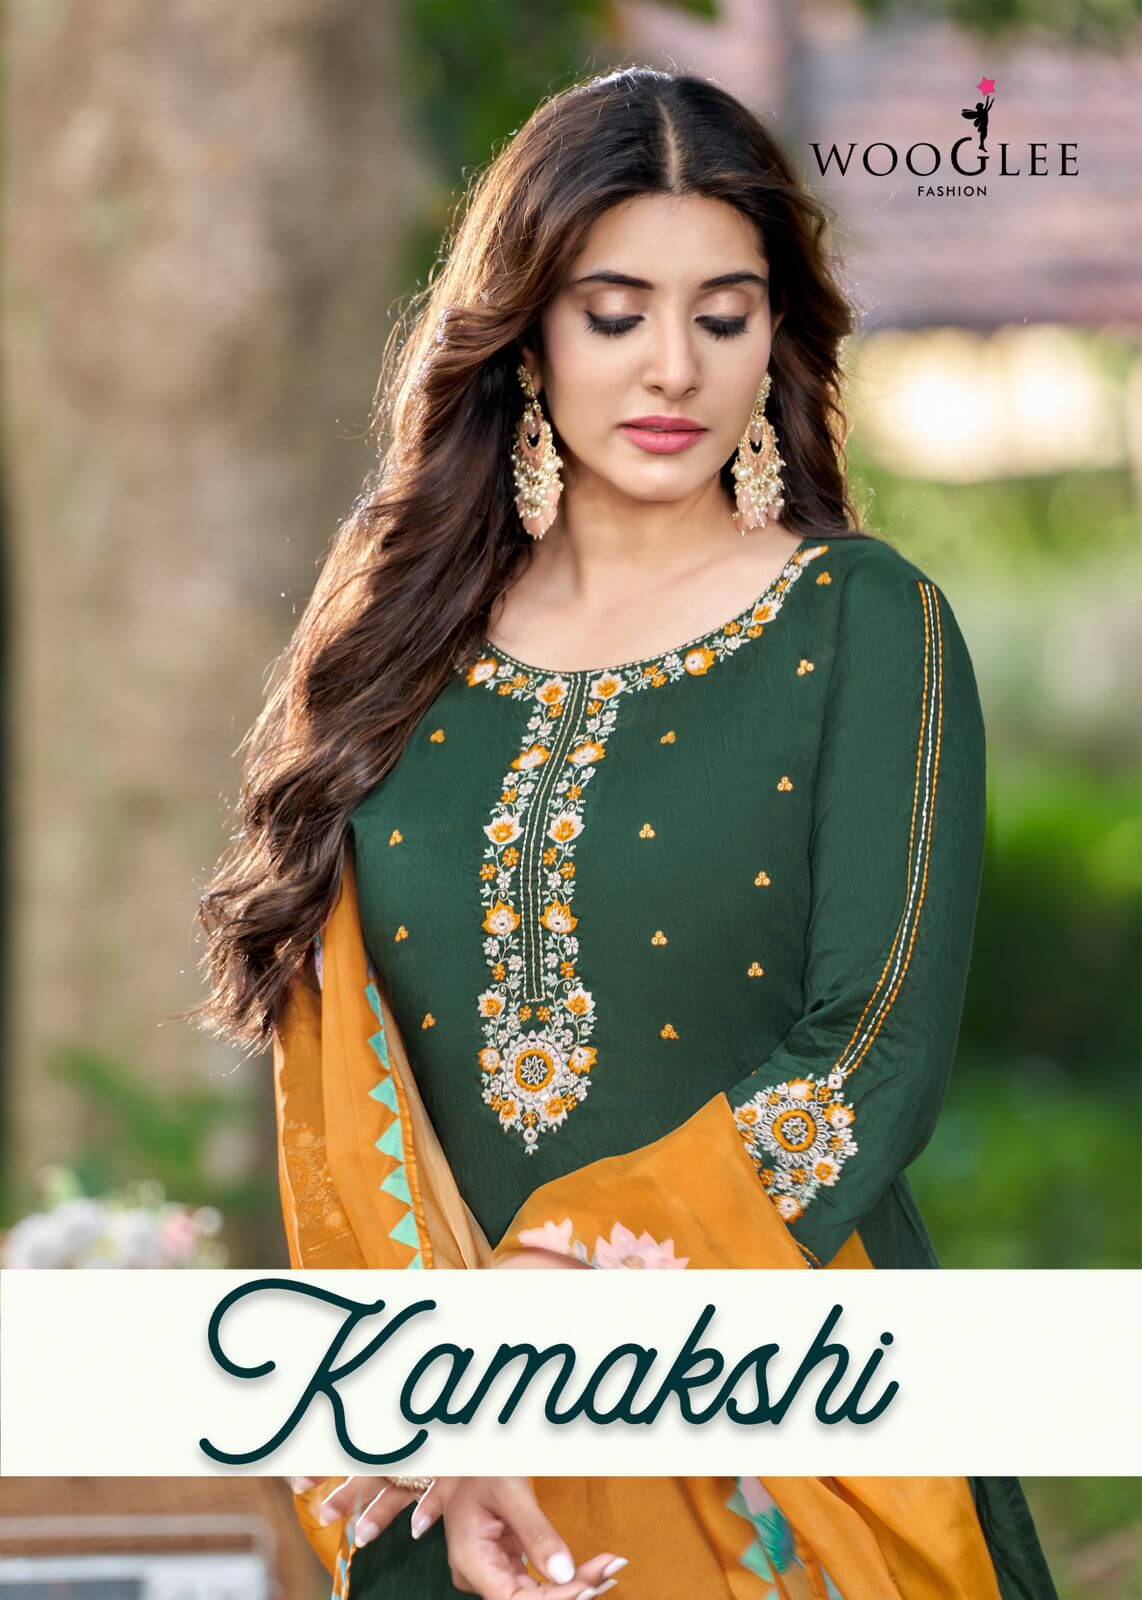 Wooglee Fashion Kamakshi Embroidery Salwar Kameez Catalog collection 3